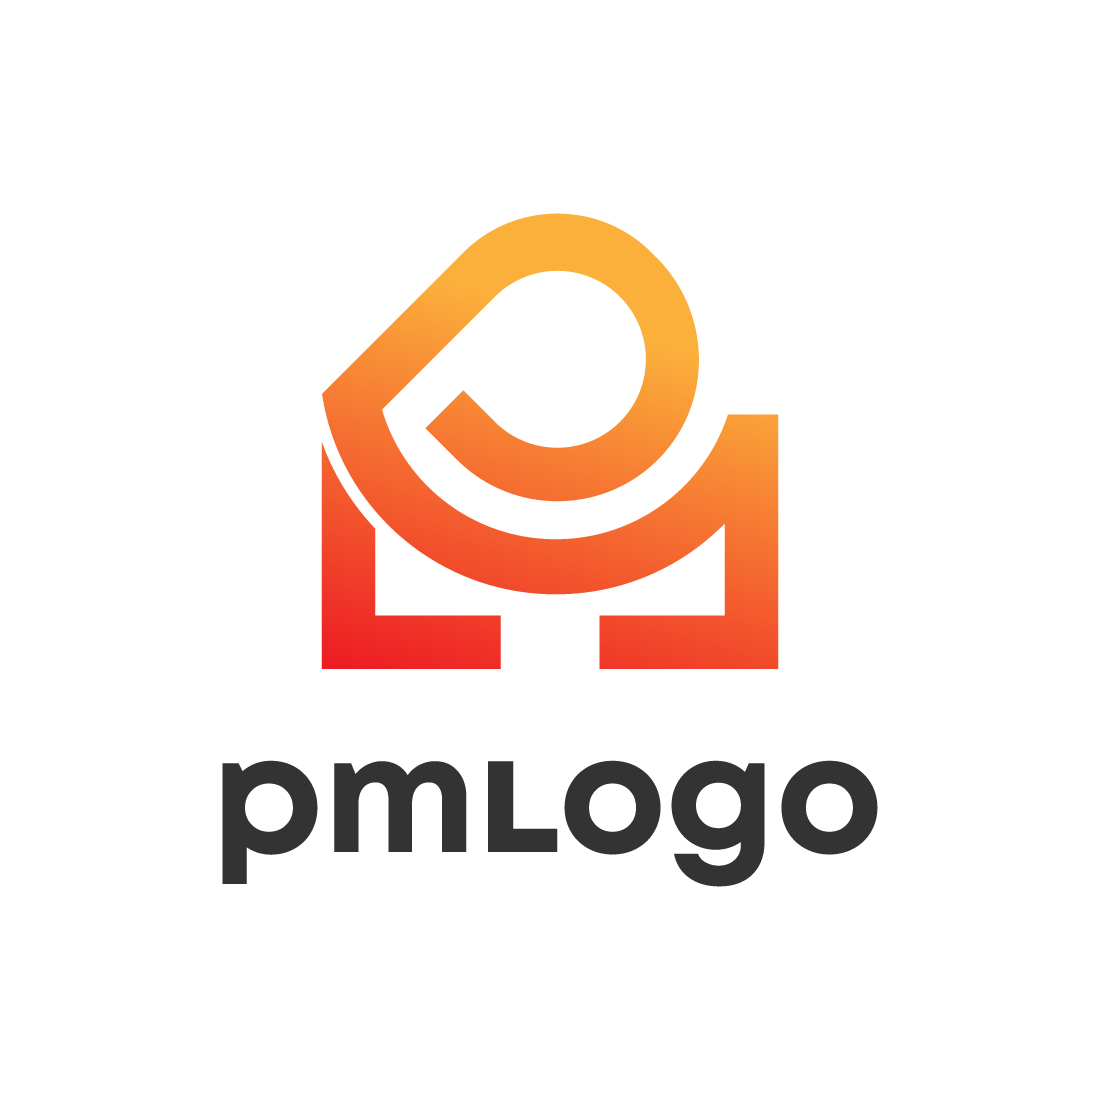 PM logo preview image.